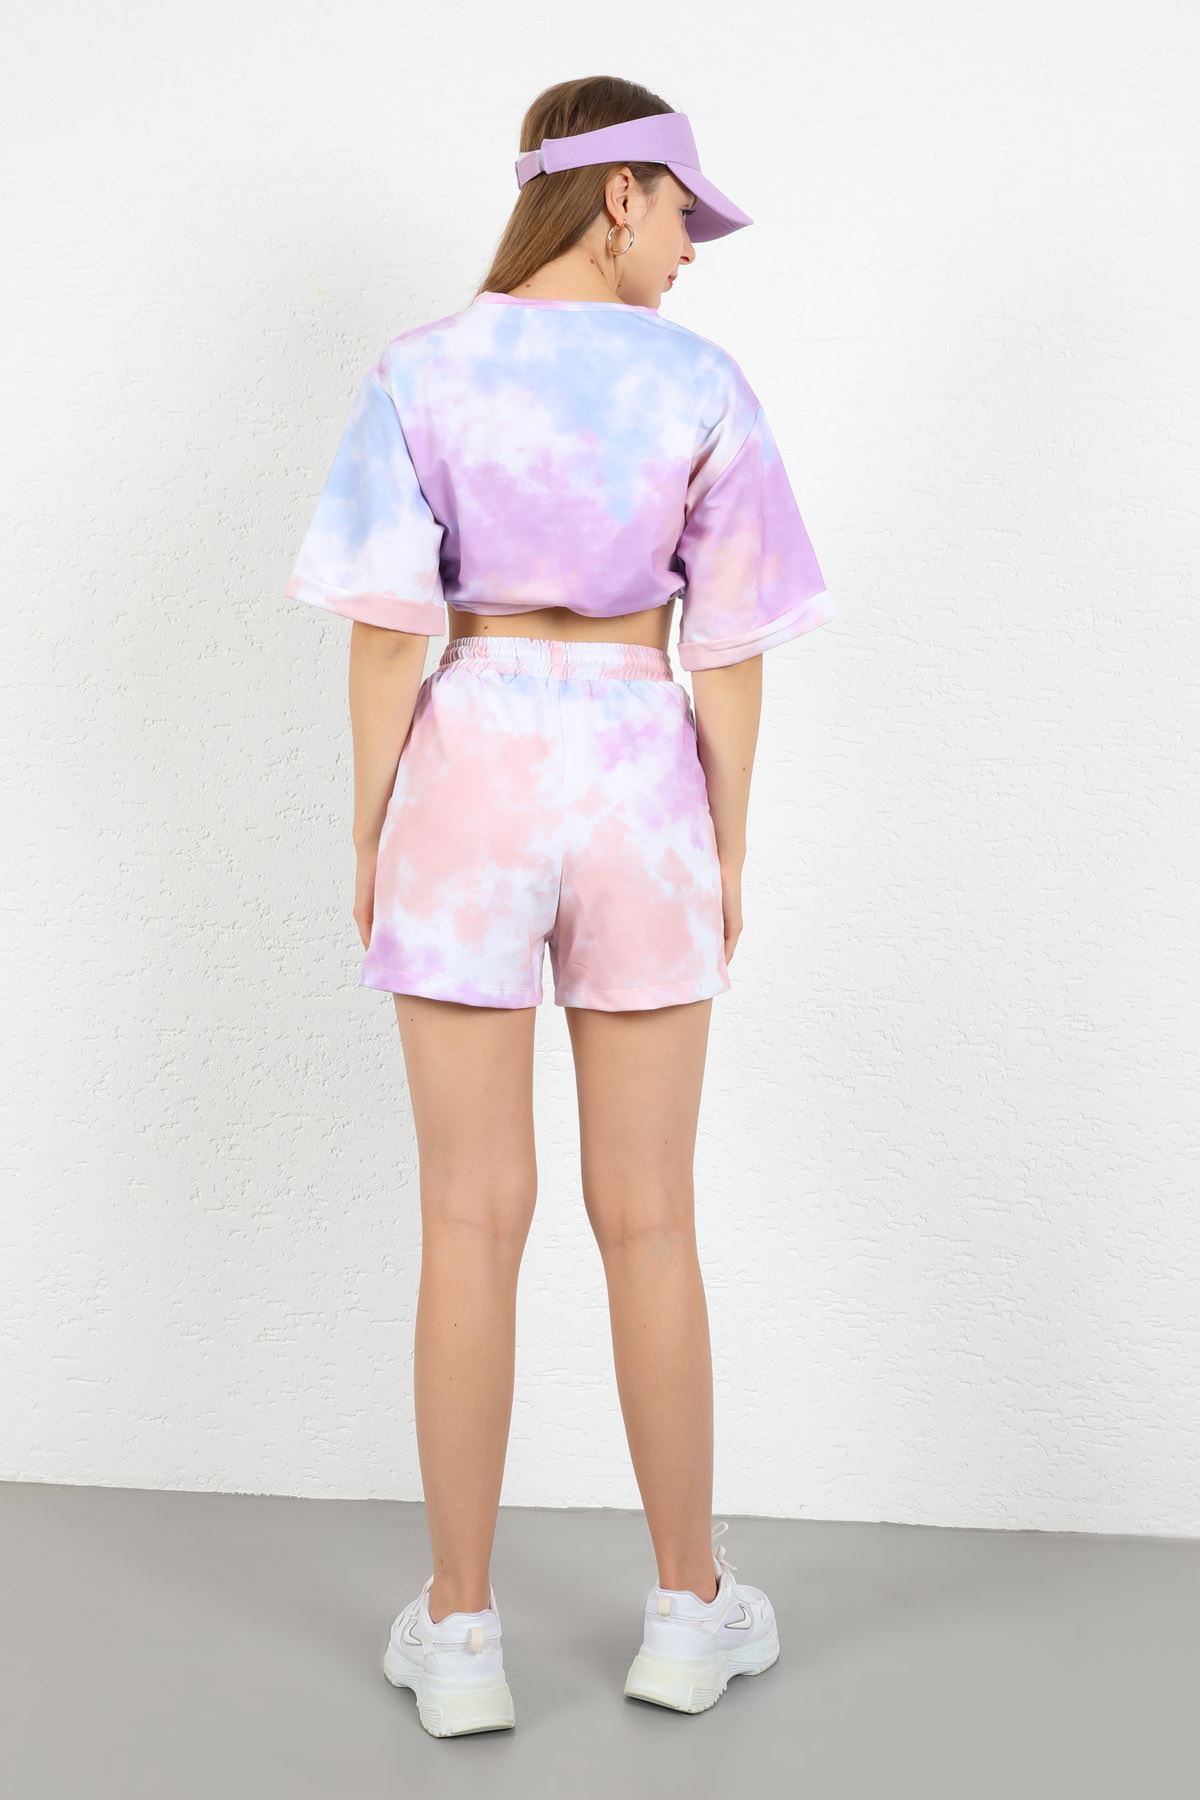 Double Knit Fabric Comfy Fit Cloud Print Women Shorts - Lilac